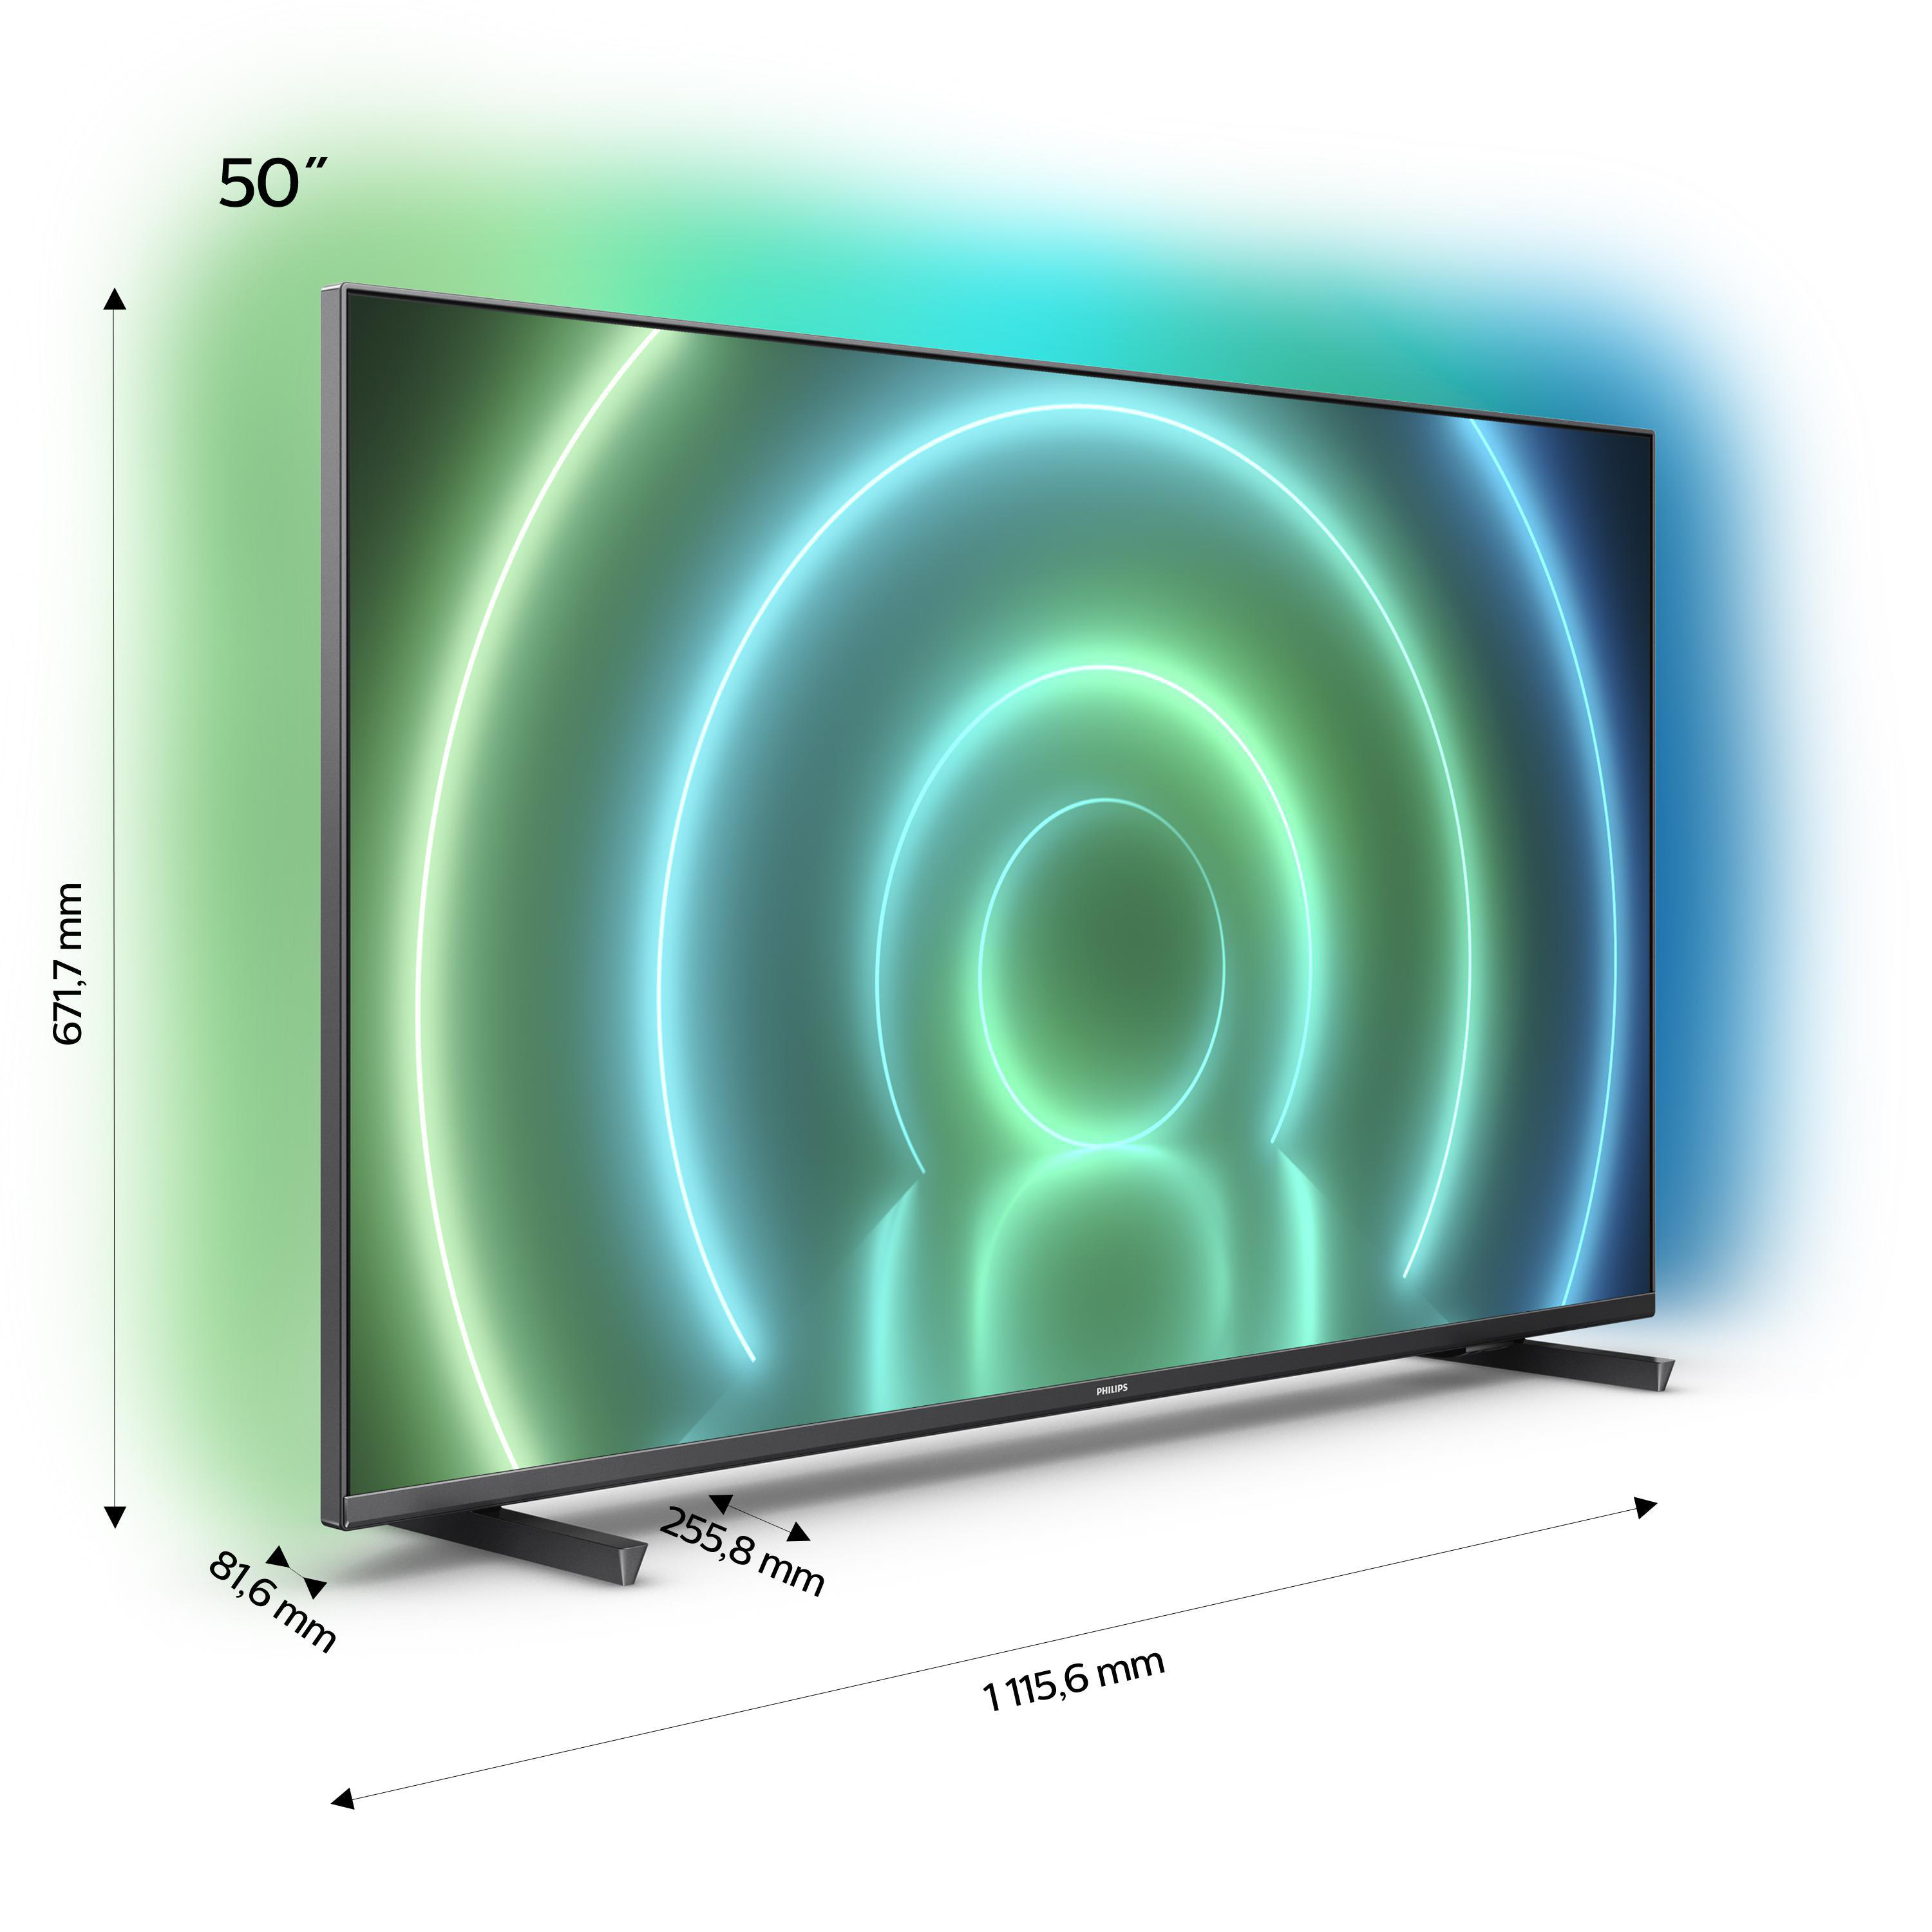 TV, TV™ Ambilight, LED 50PUS7906/12 Android TV 50 UHD cm, 10 (Flat, Zoll PHILIPS 4K, SMART 126 / (Q))